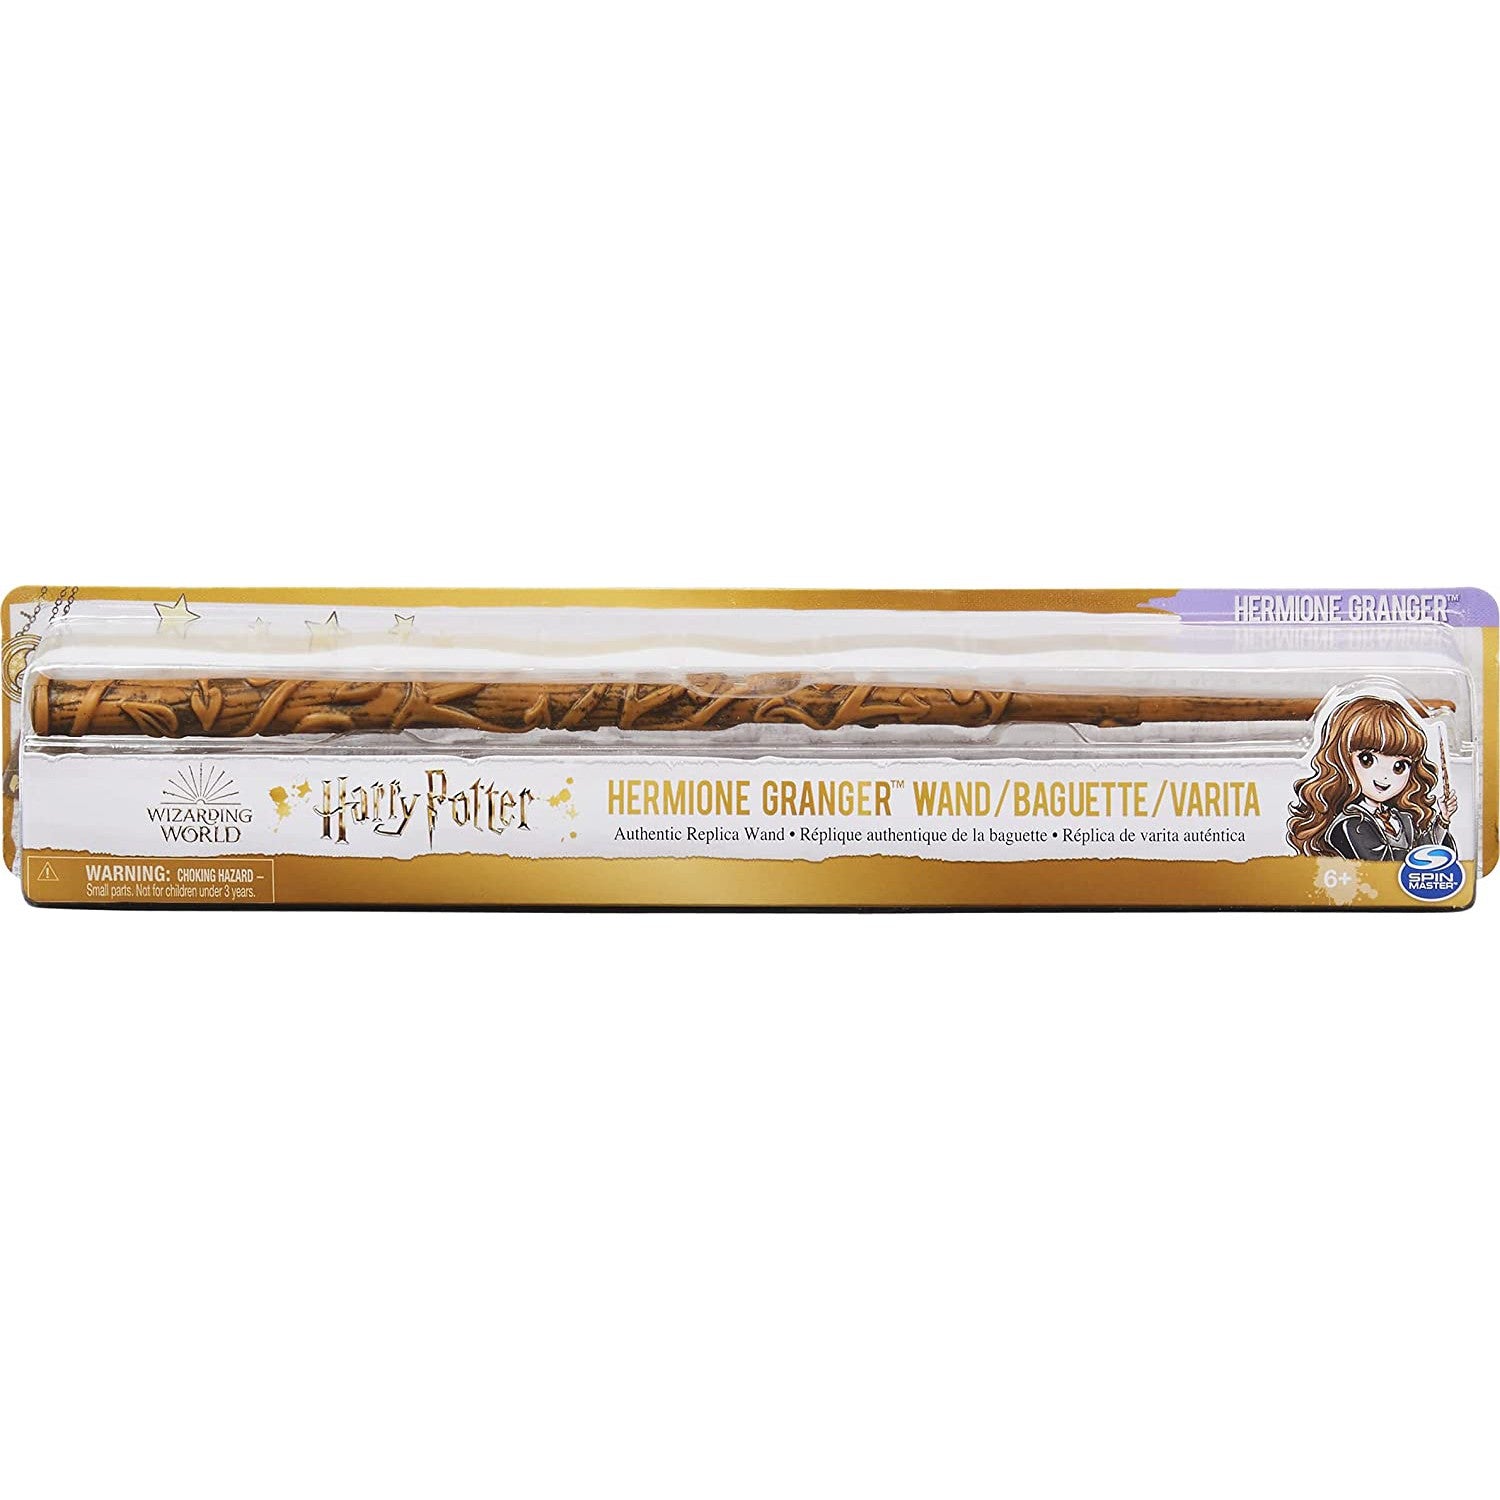 Harry Potter Wizarding World 12 inch Spellbinding Magic Wand Hermione